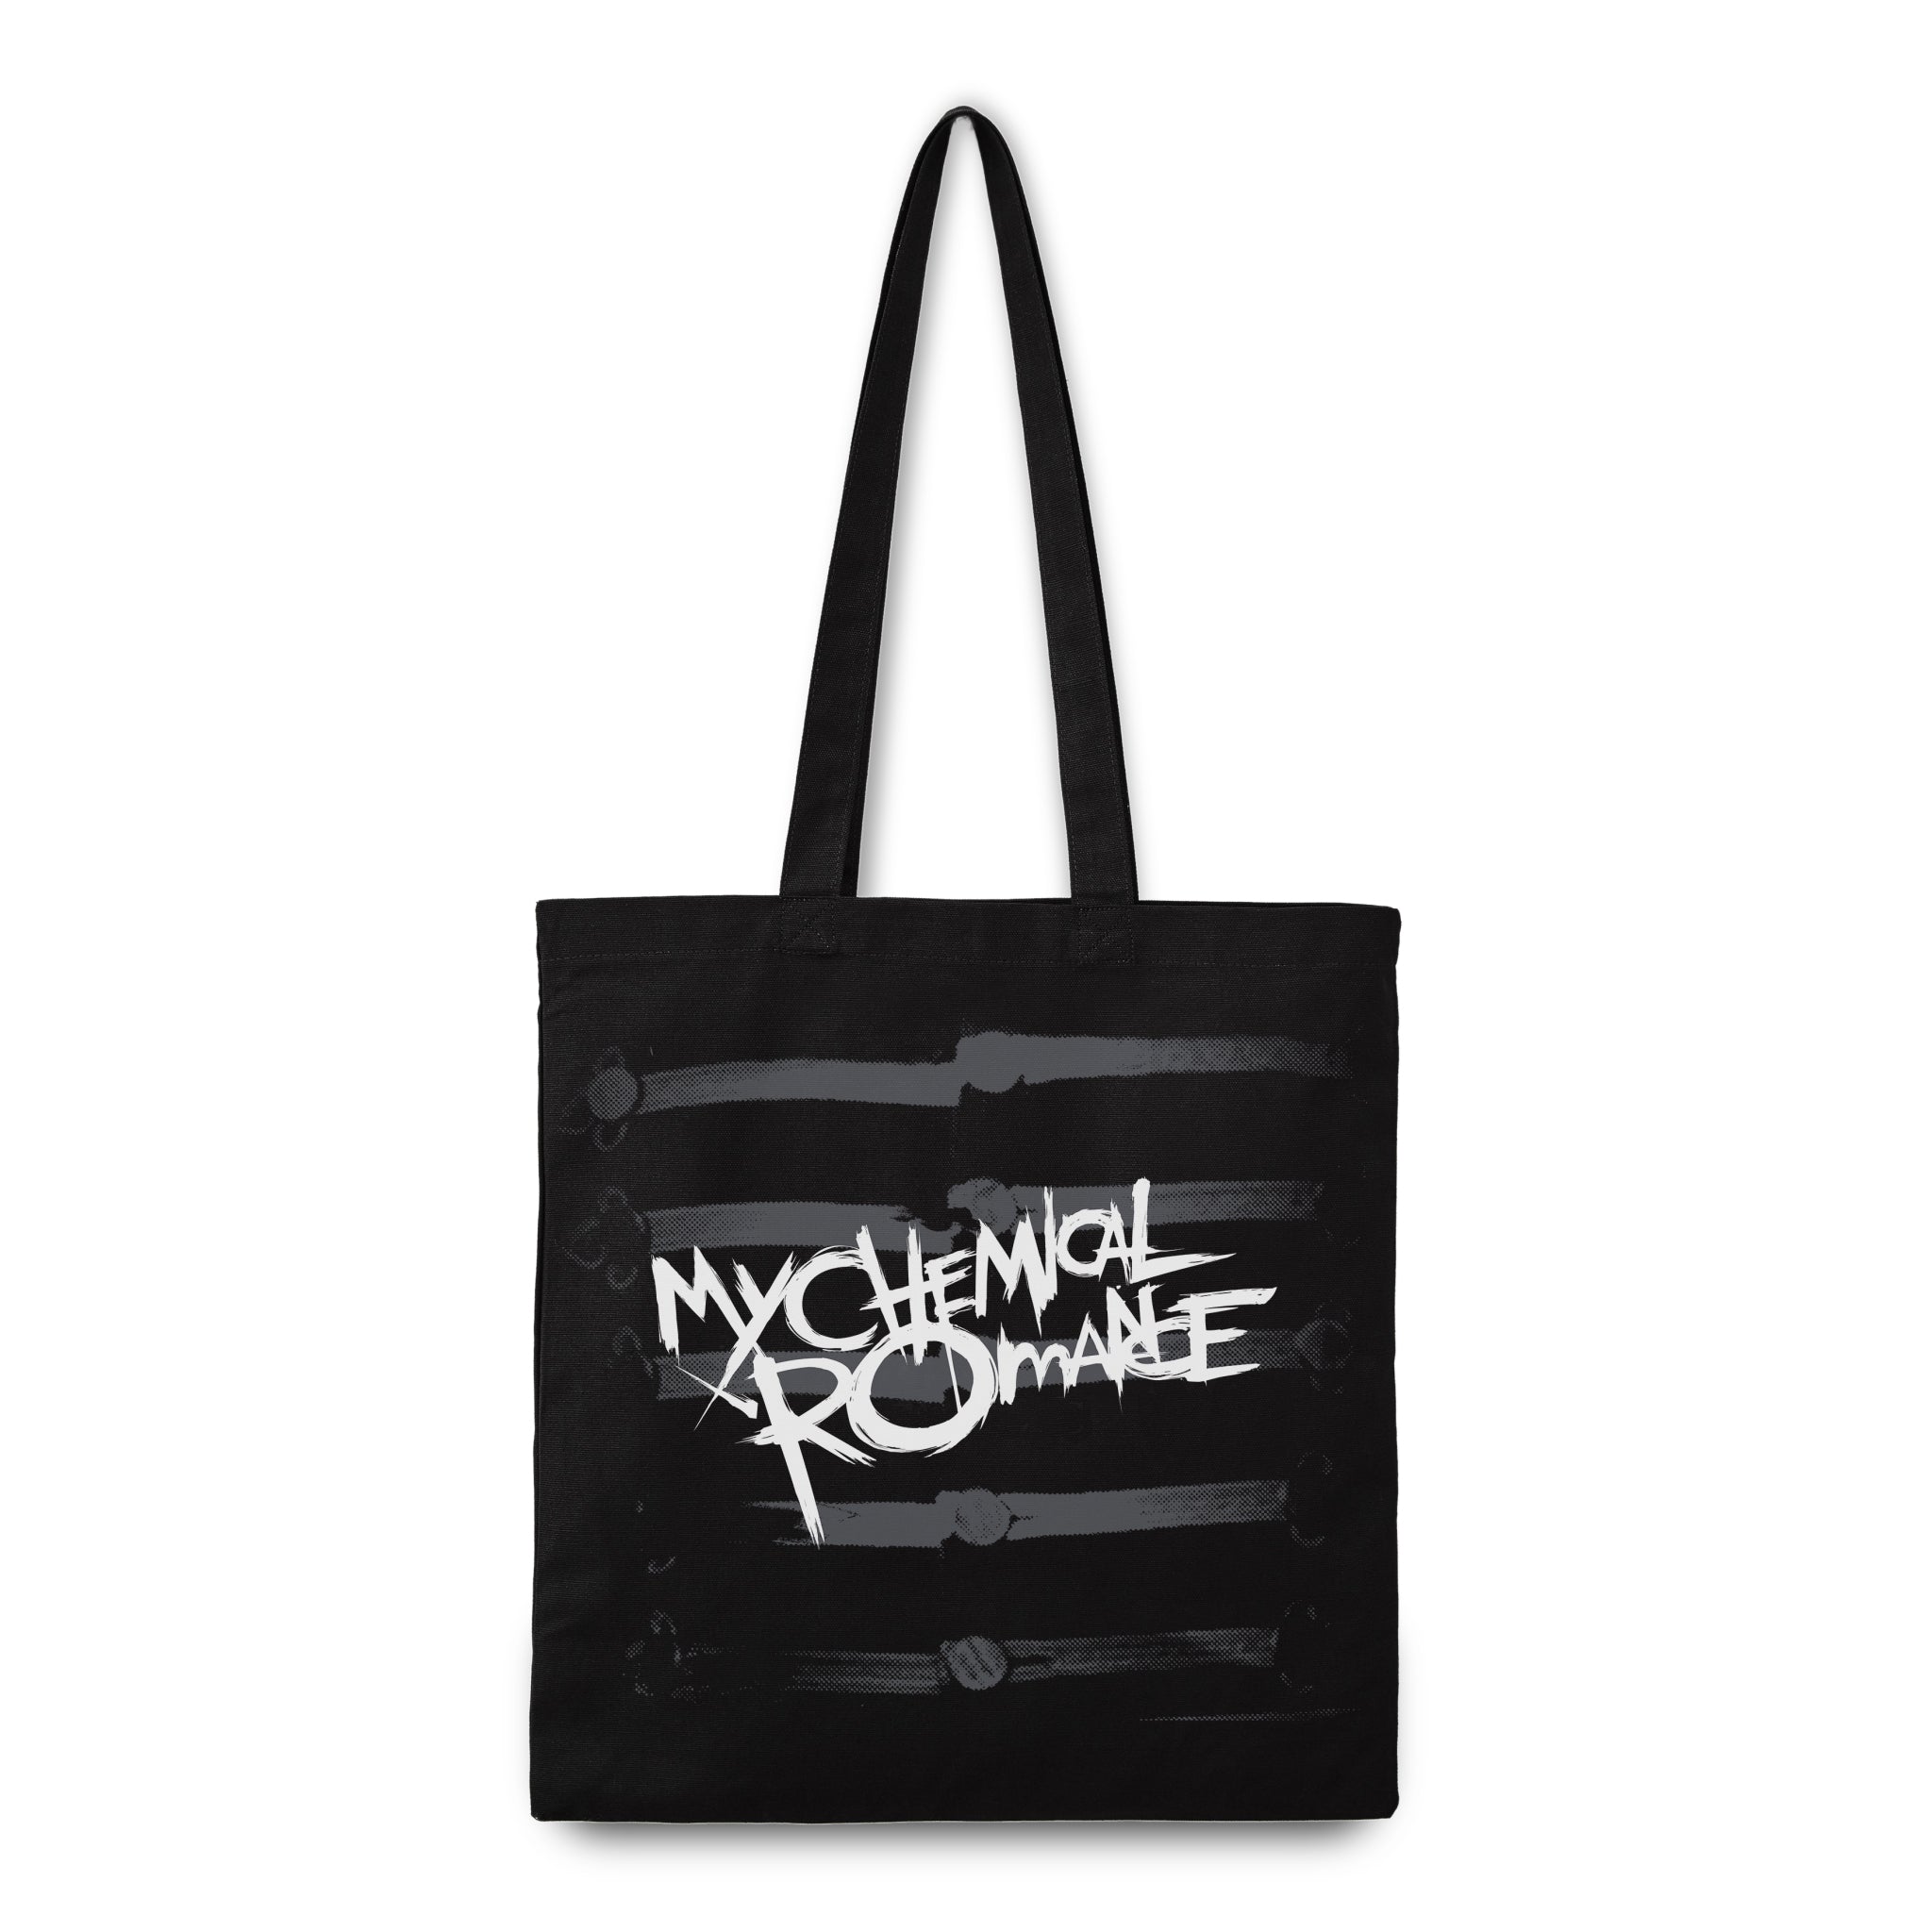 My Chemical Romance - Black Parade - Black Cotton Messenger Bag